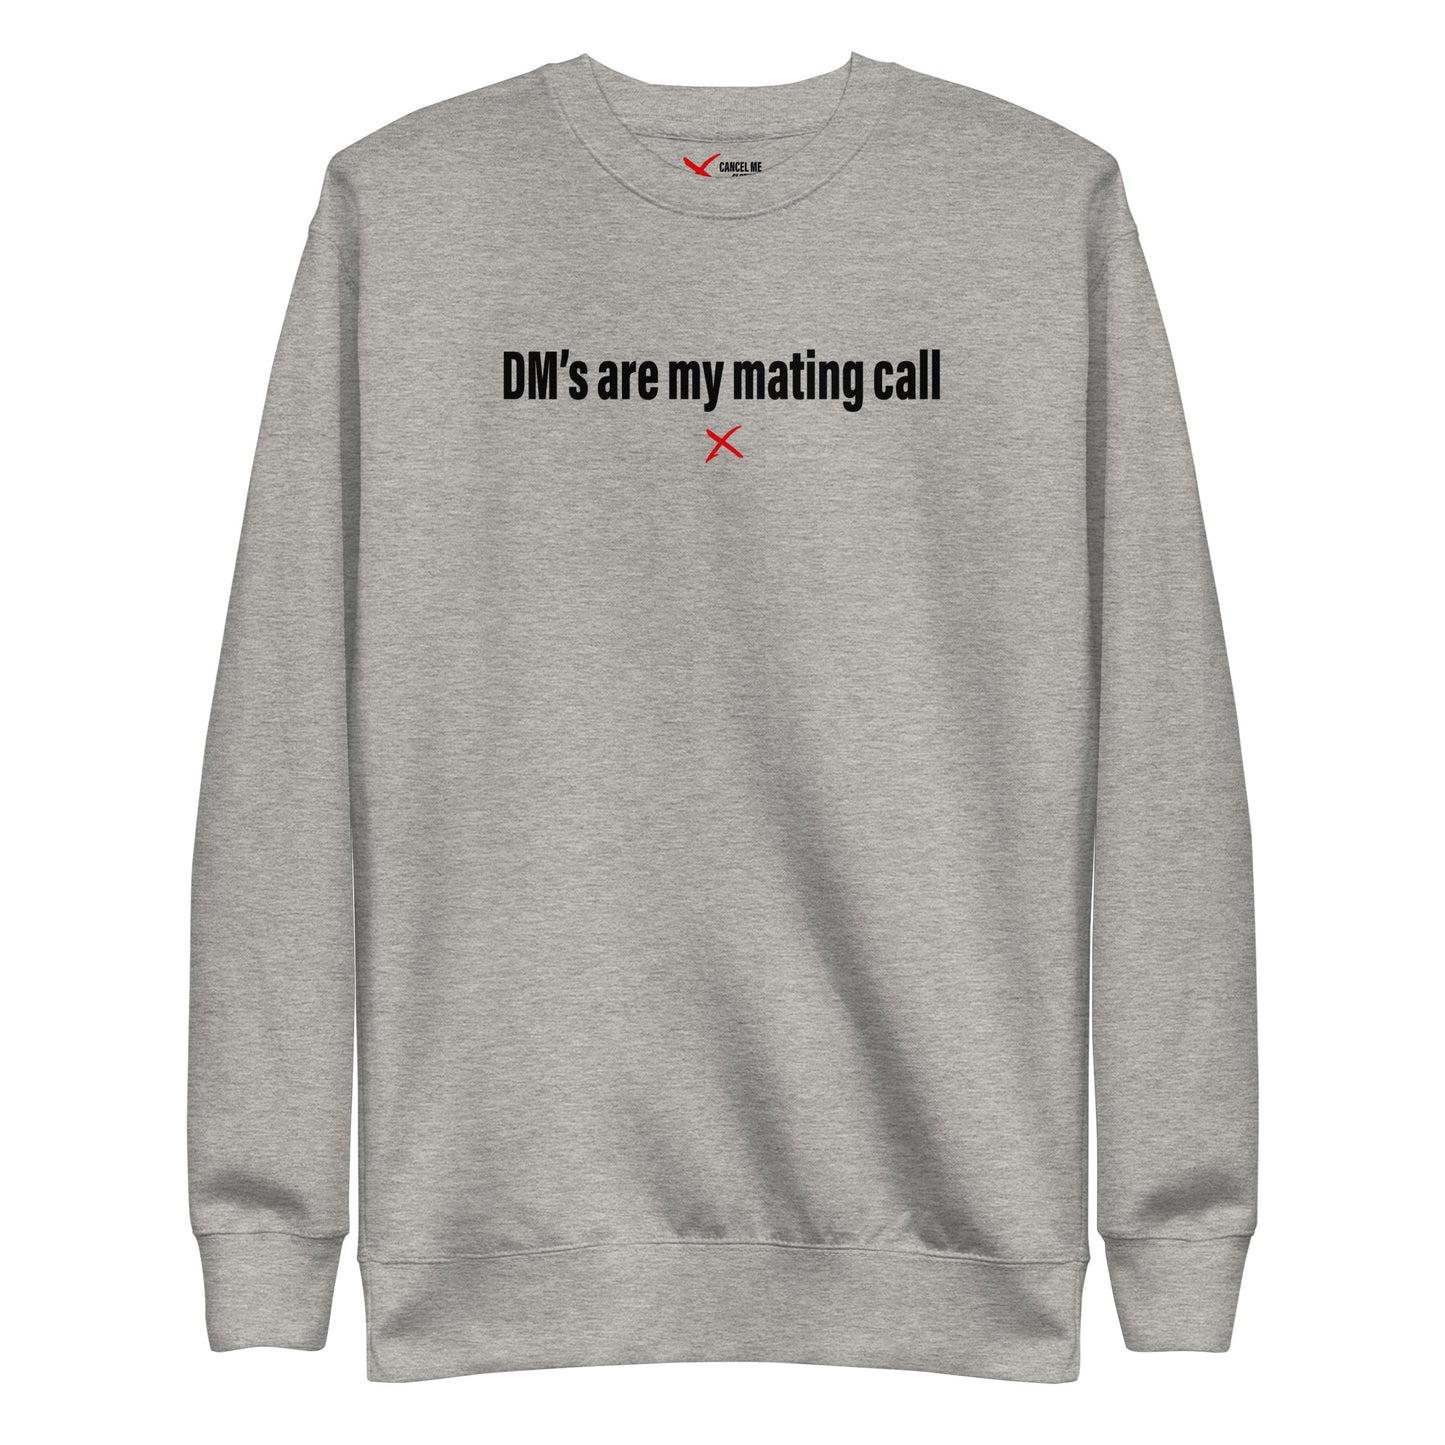 DM's are my mating call - Sweatshirt